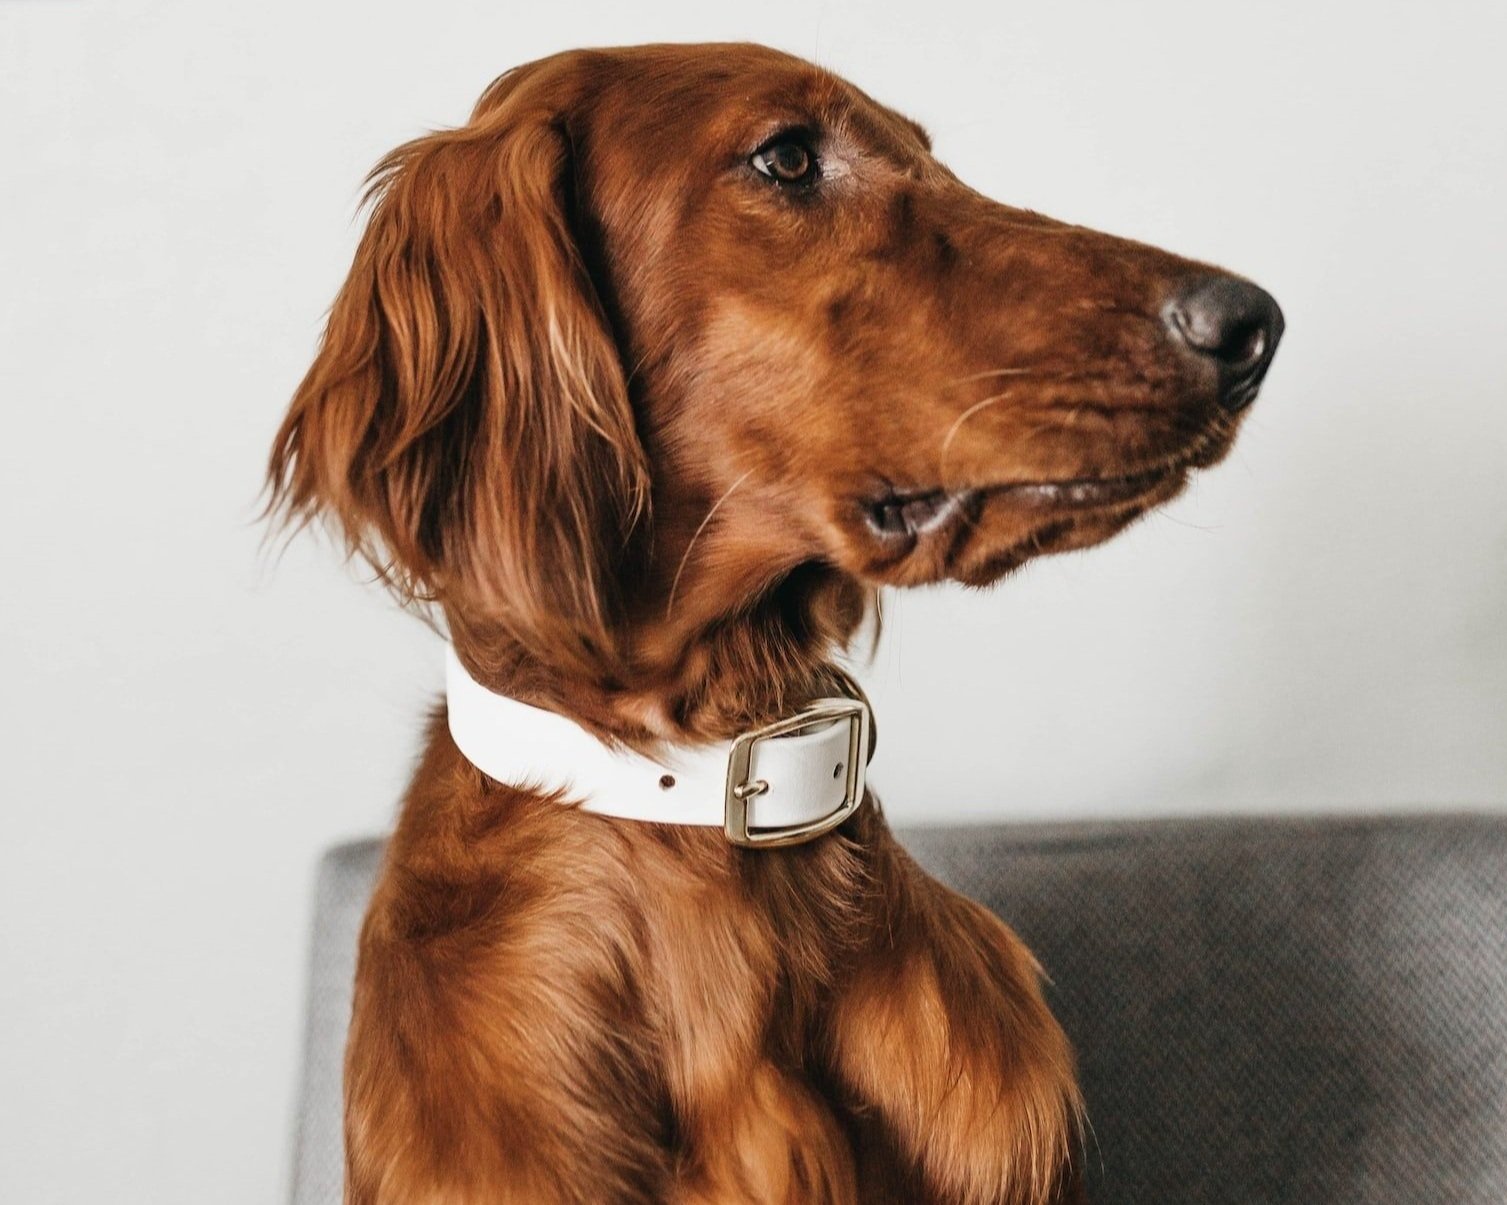 Should I Take My Dog’s Collar Off At Night?